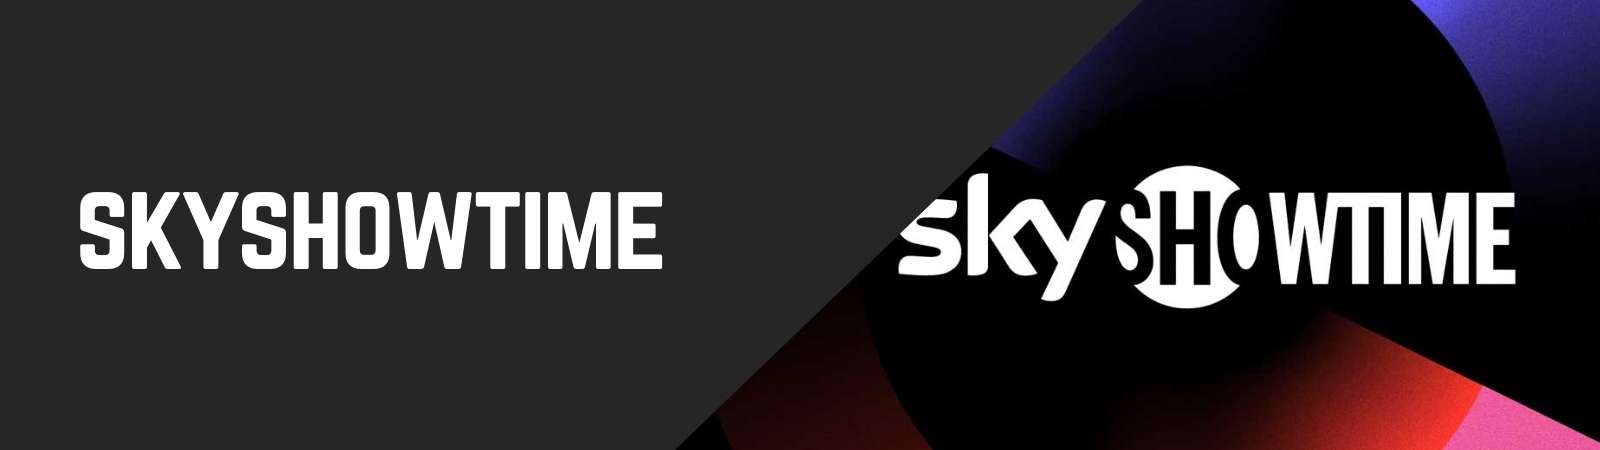 skyshowtime-aanbod-kosten-launch